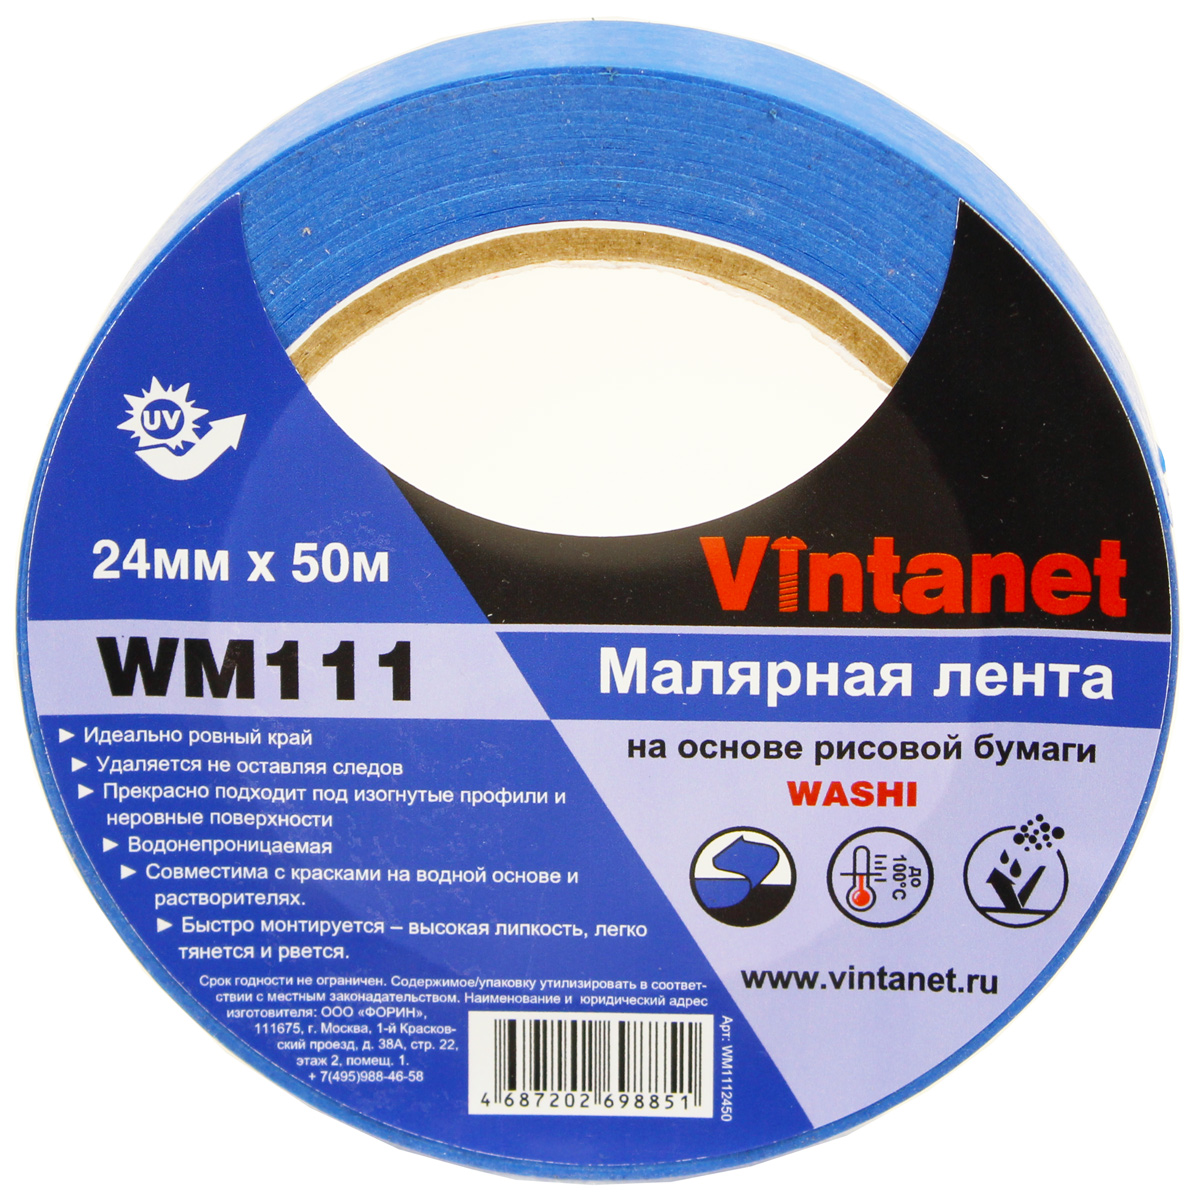 Лента малярная на основе рисовой бумаги Washi, Vintanet WM111, 24мм х 50м, WM1112450 клейкие washi ленты д декора